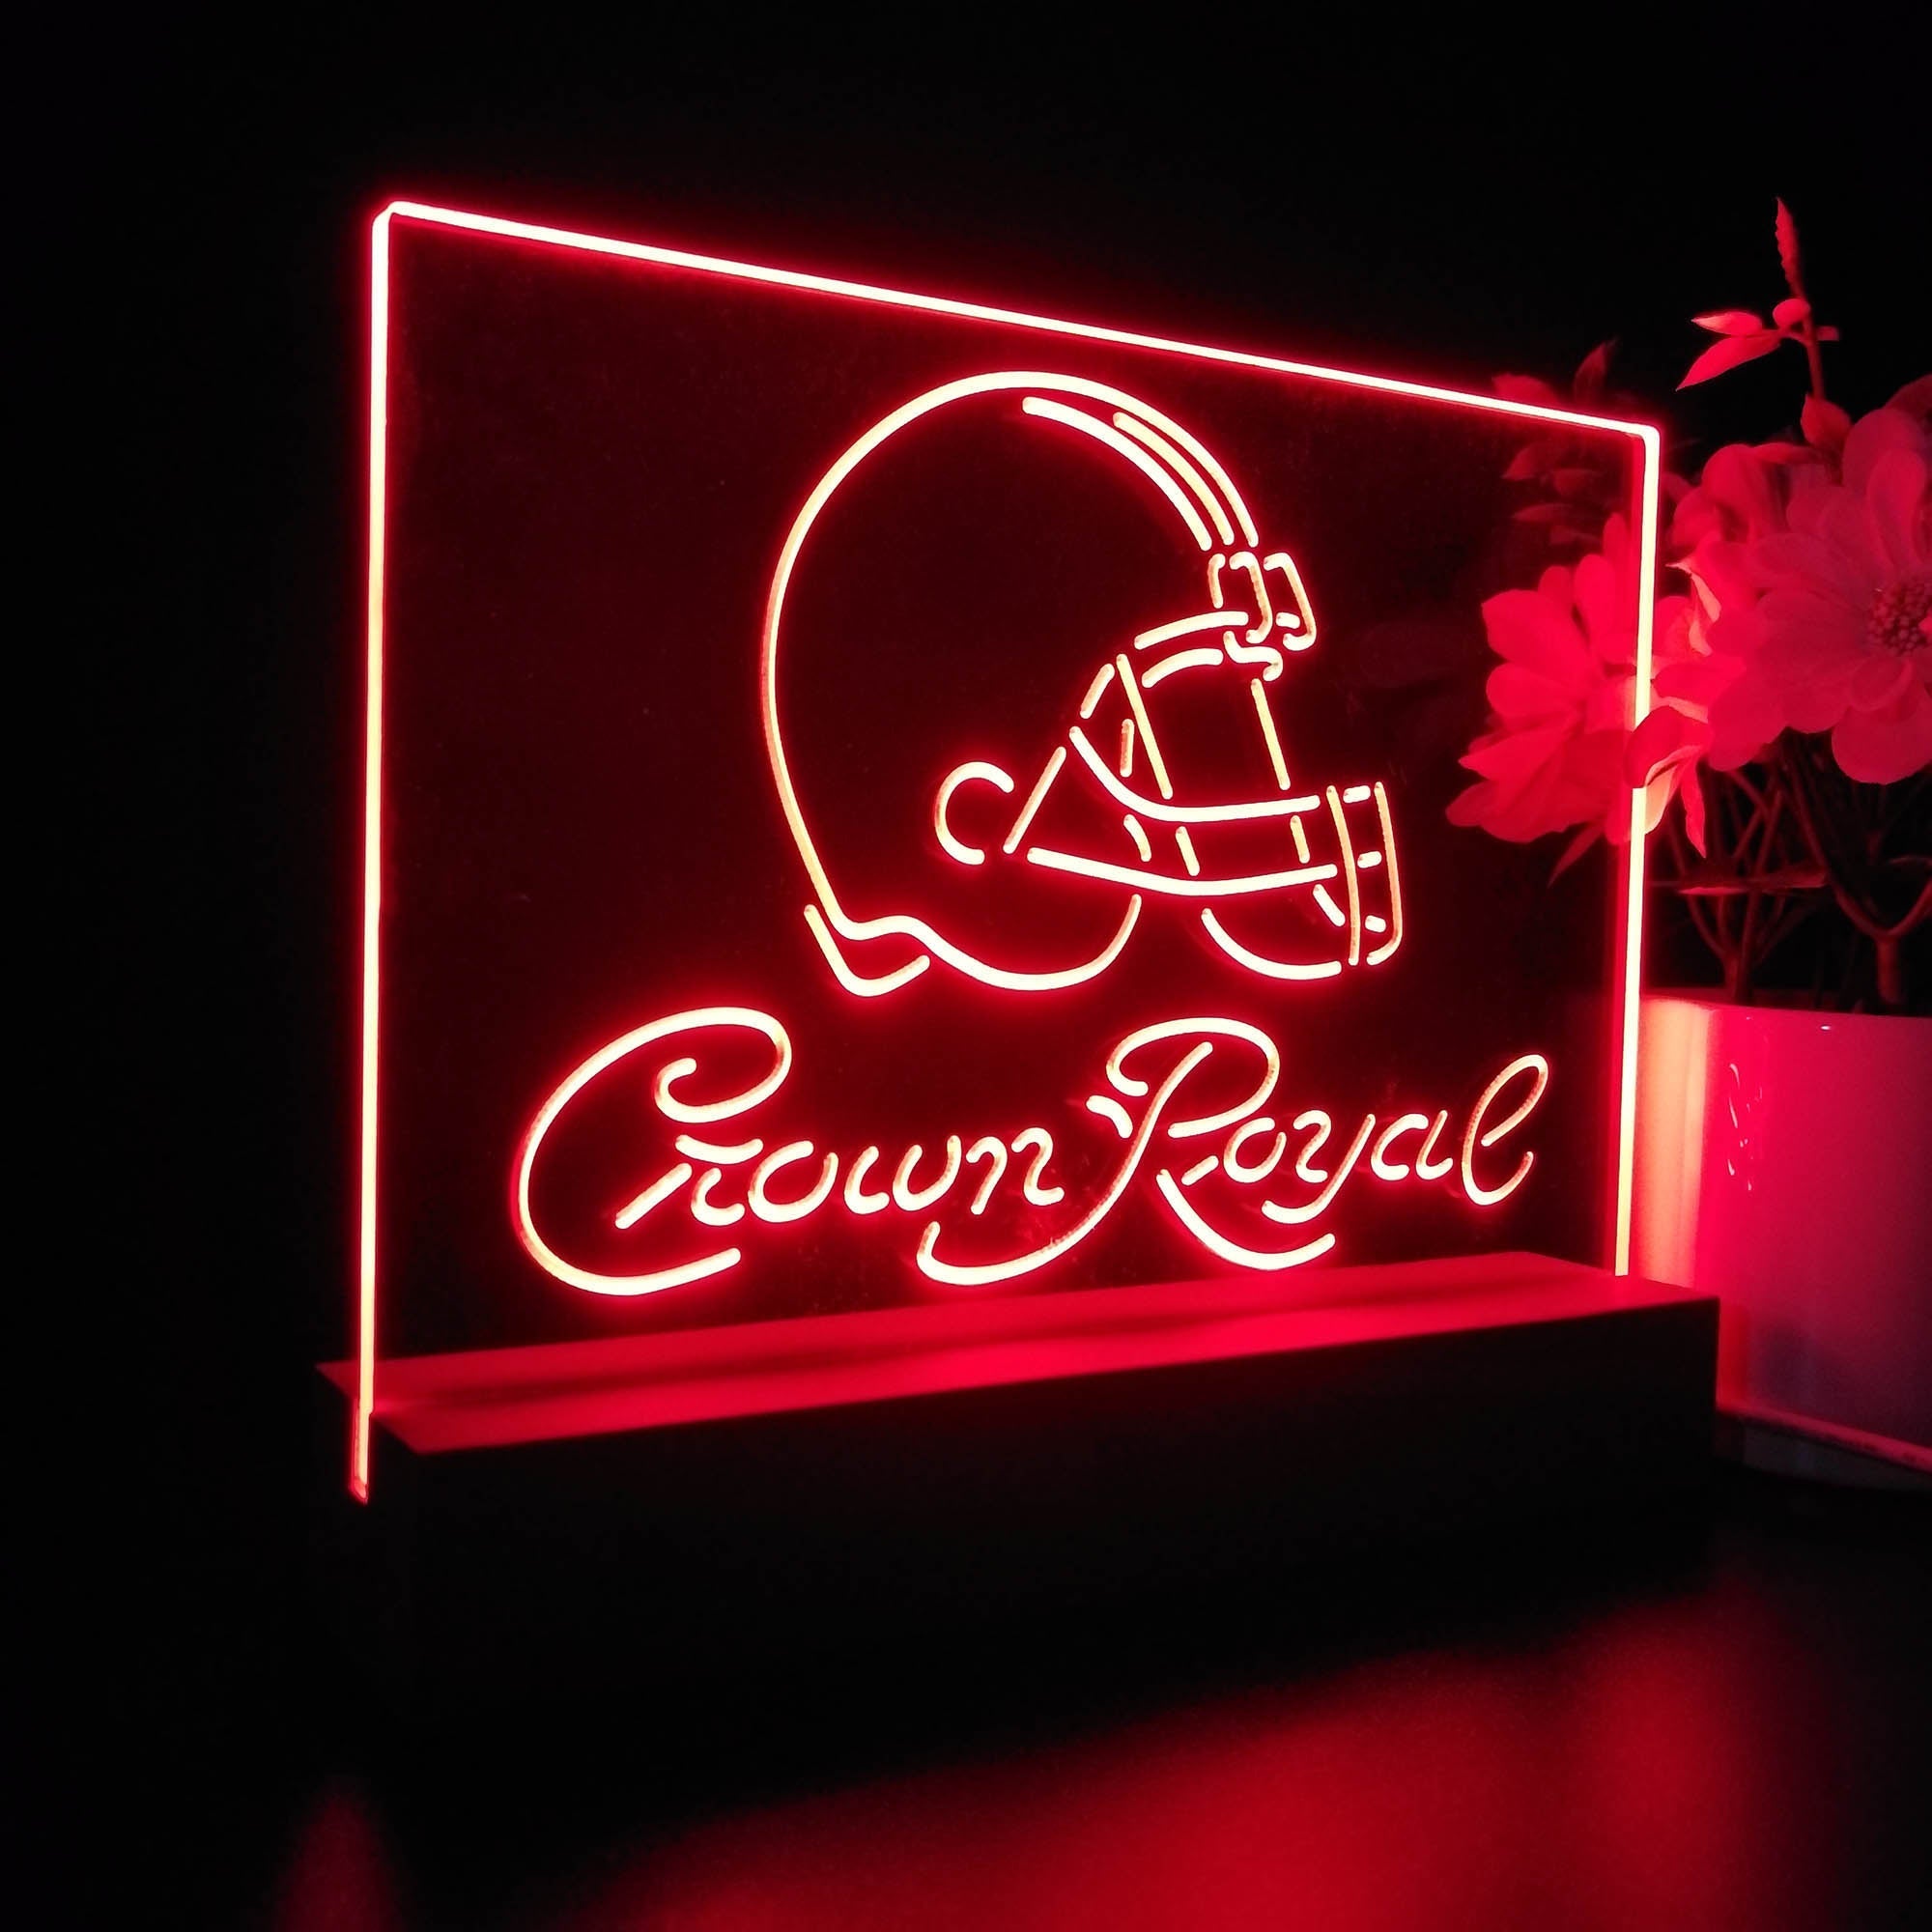 Crown Royal Bar Cleveland Browns Est. 1946 Night Light Pub Bar Lamp